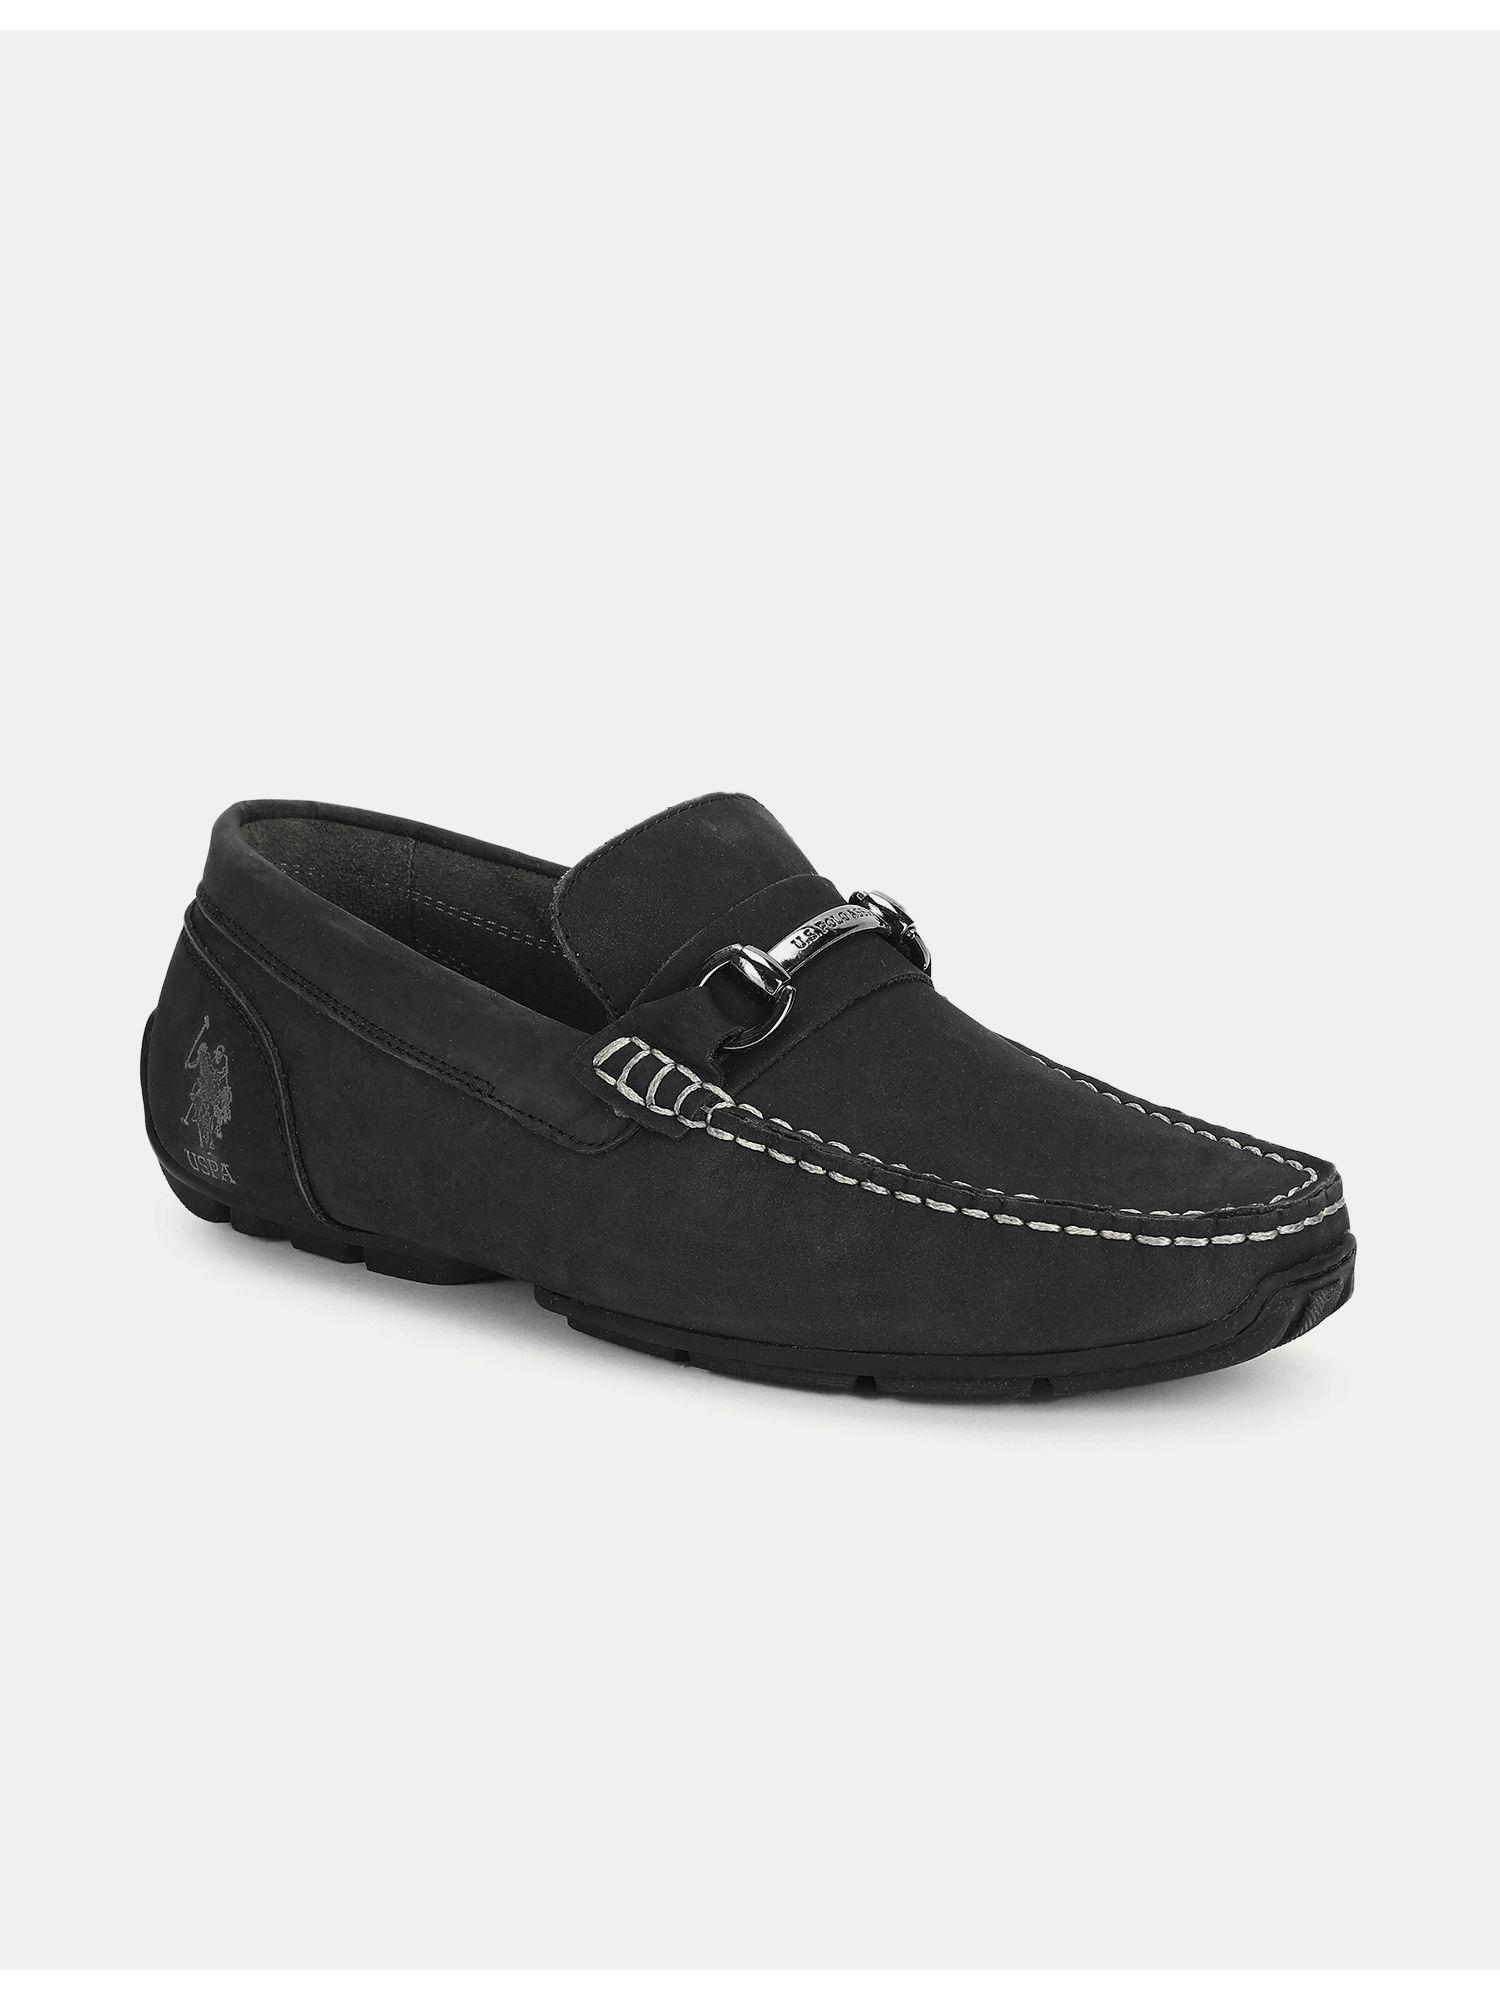 hebbar 3.0 mens casual solid black sneakers